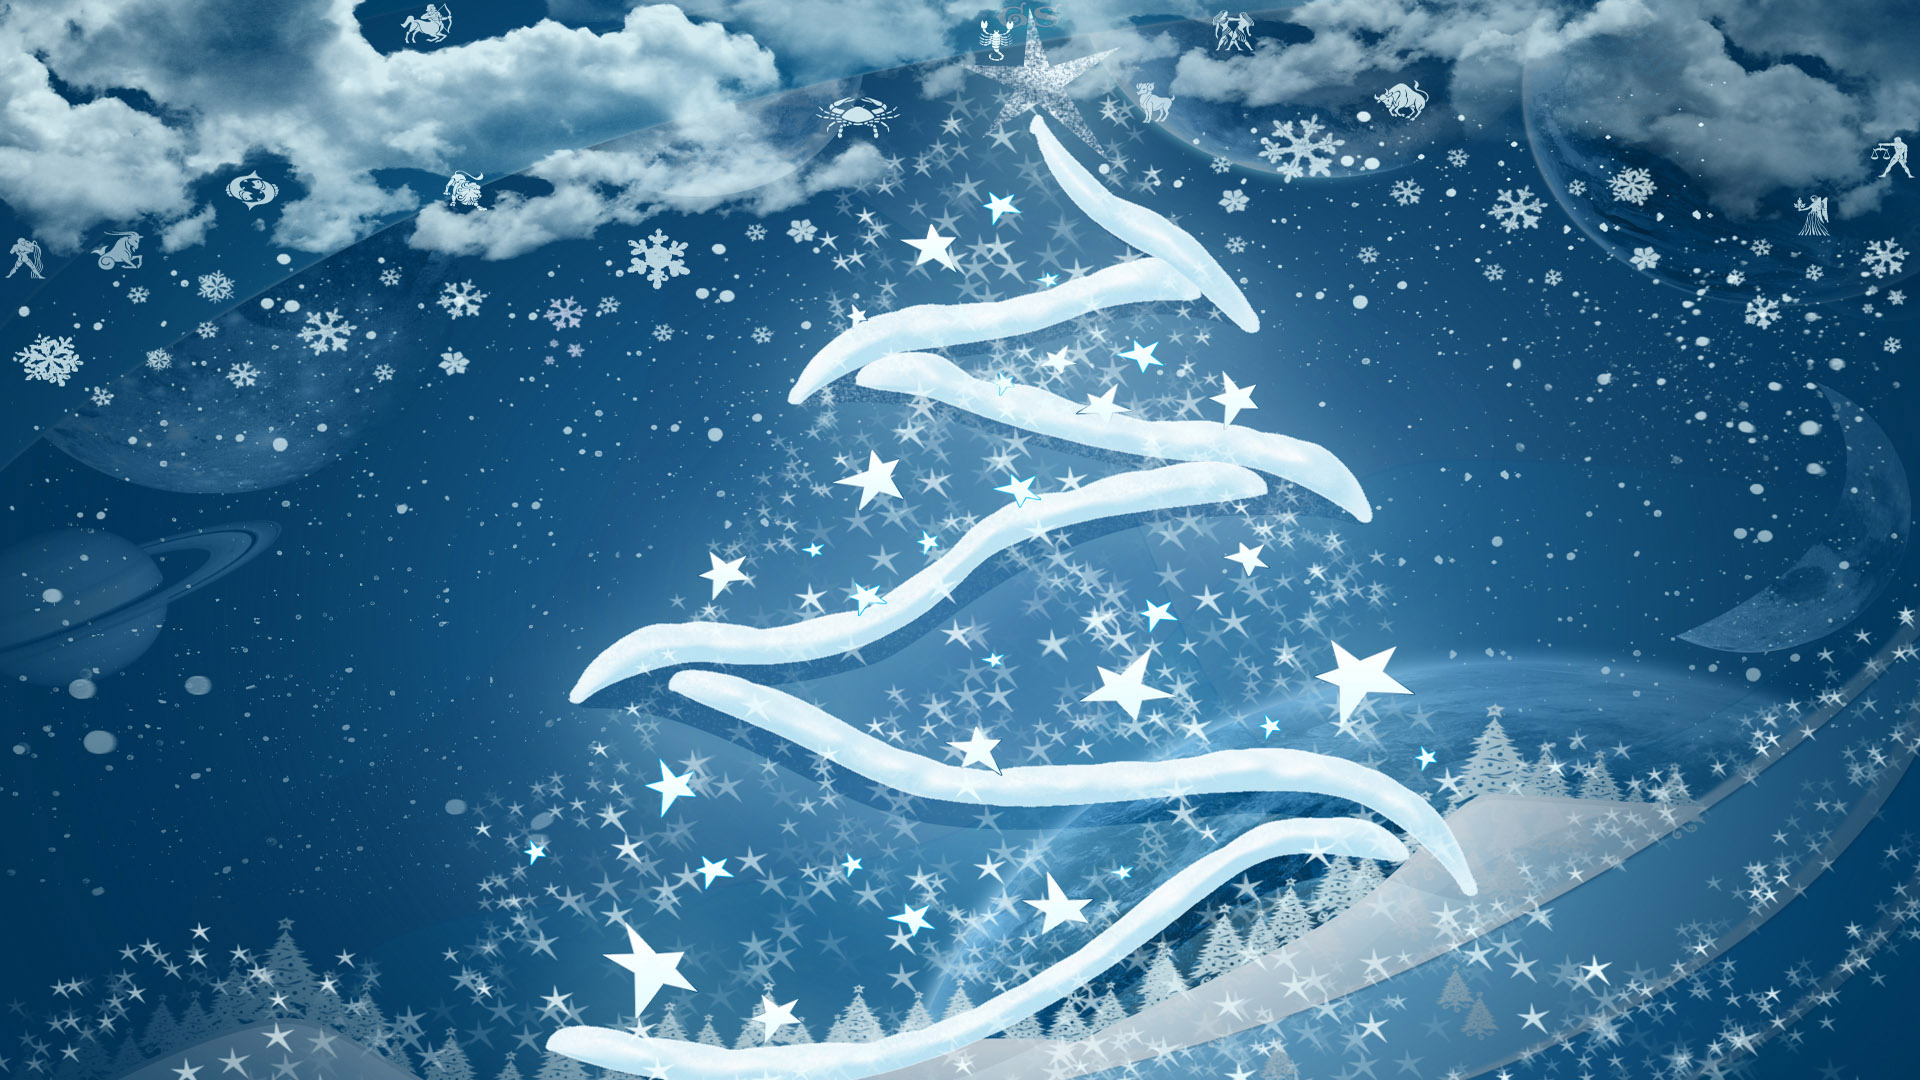 Blue Snowy Christmas HD Wallpaper FullHDwpp Full